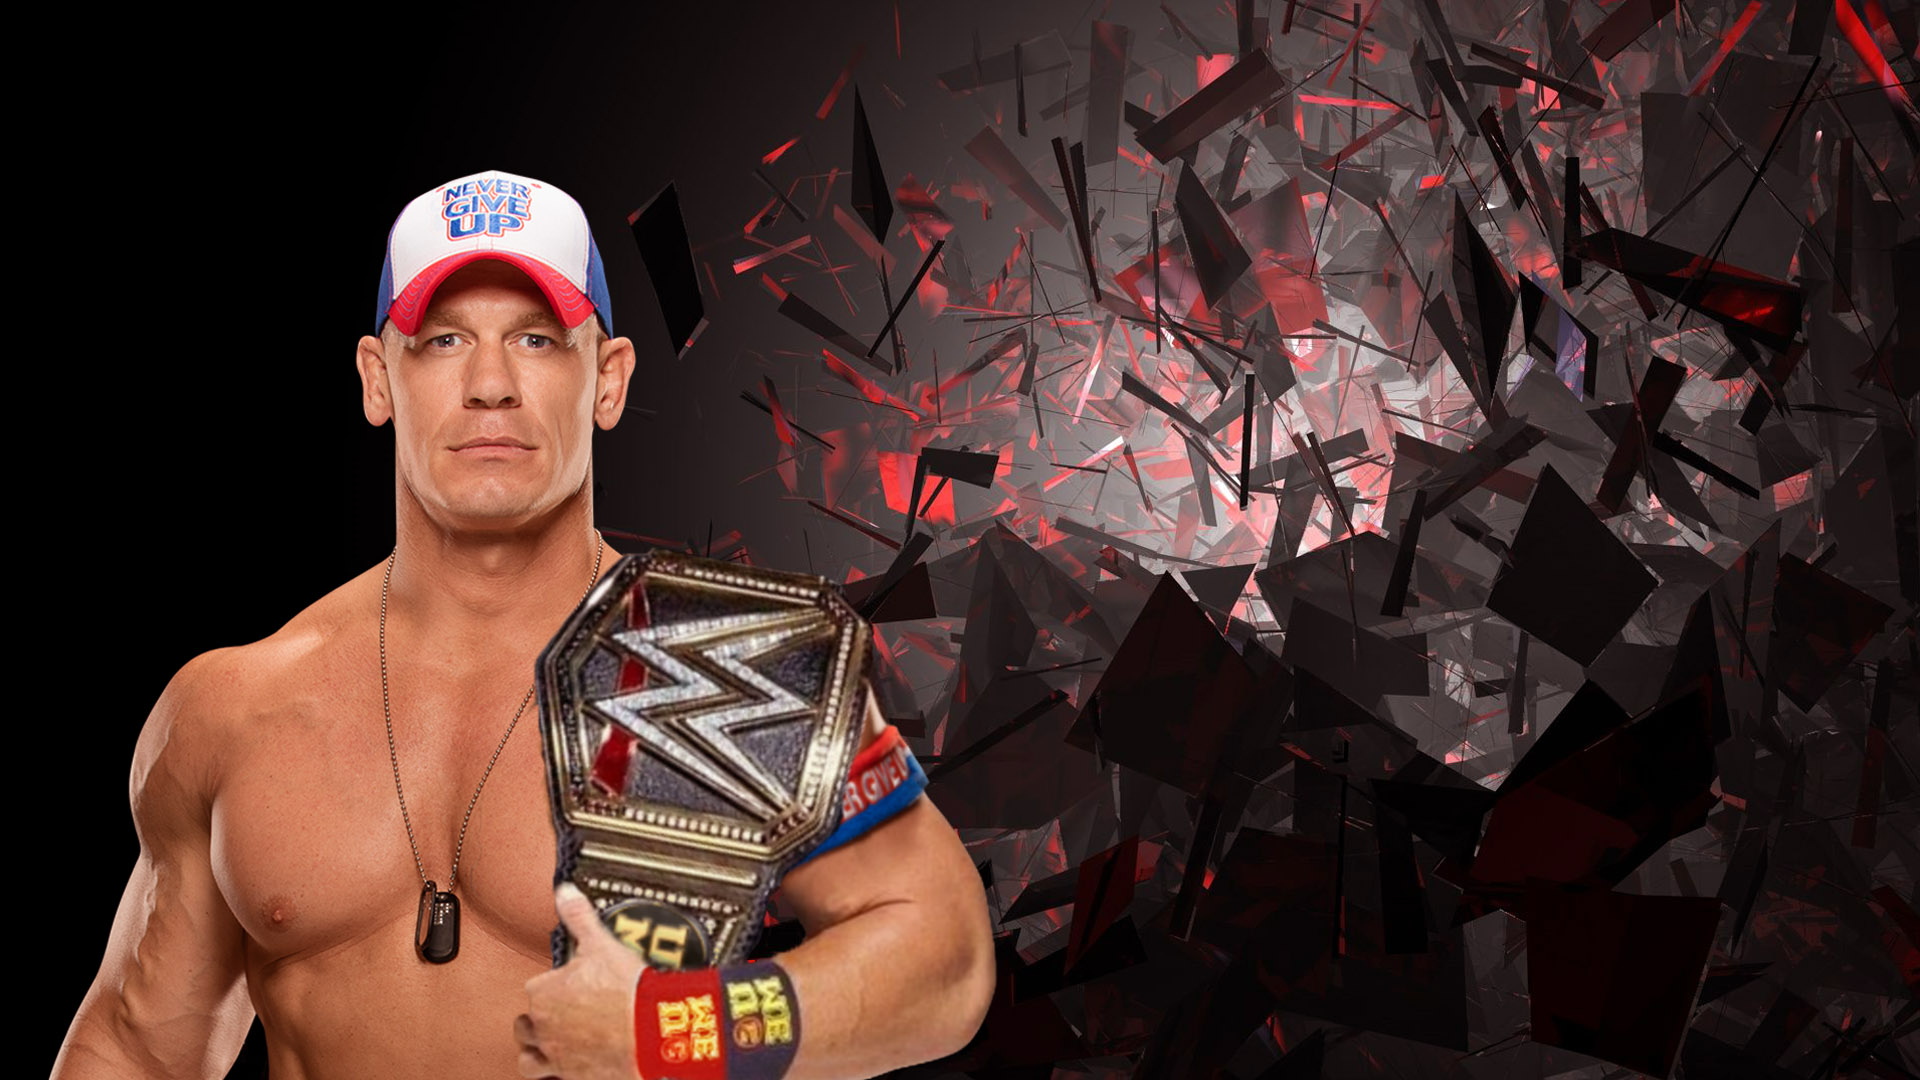 John Cena Background Puter Wallpaper